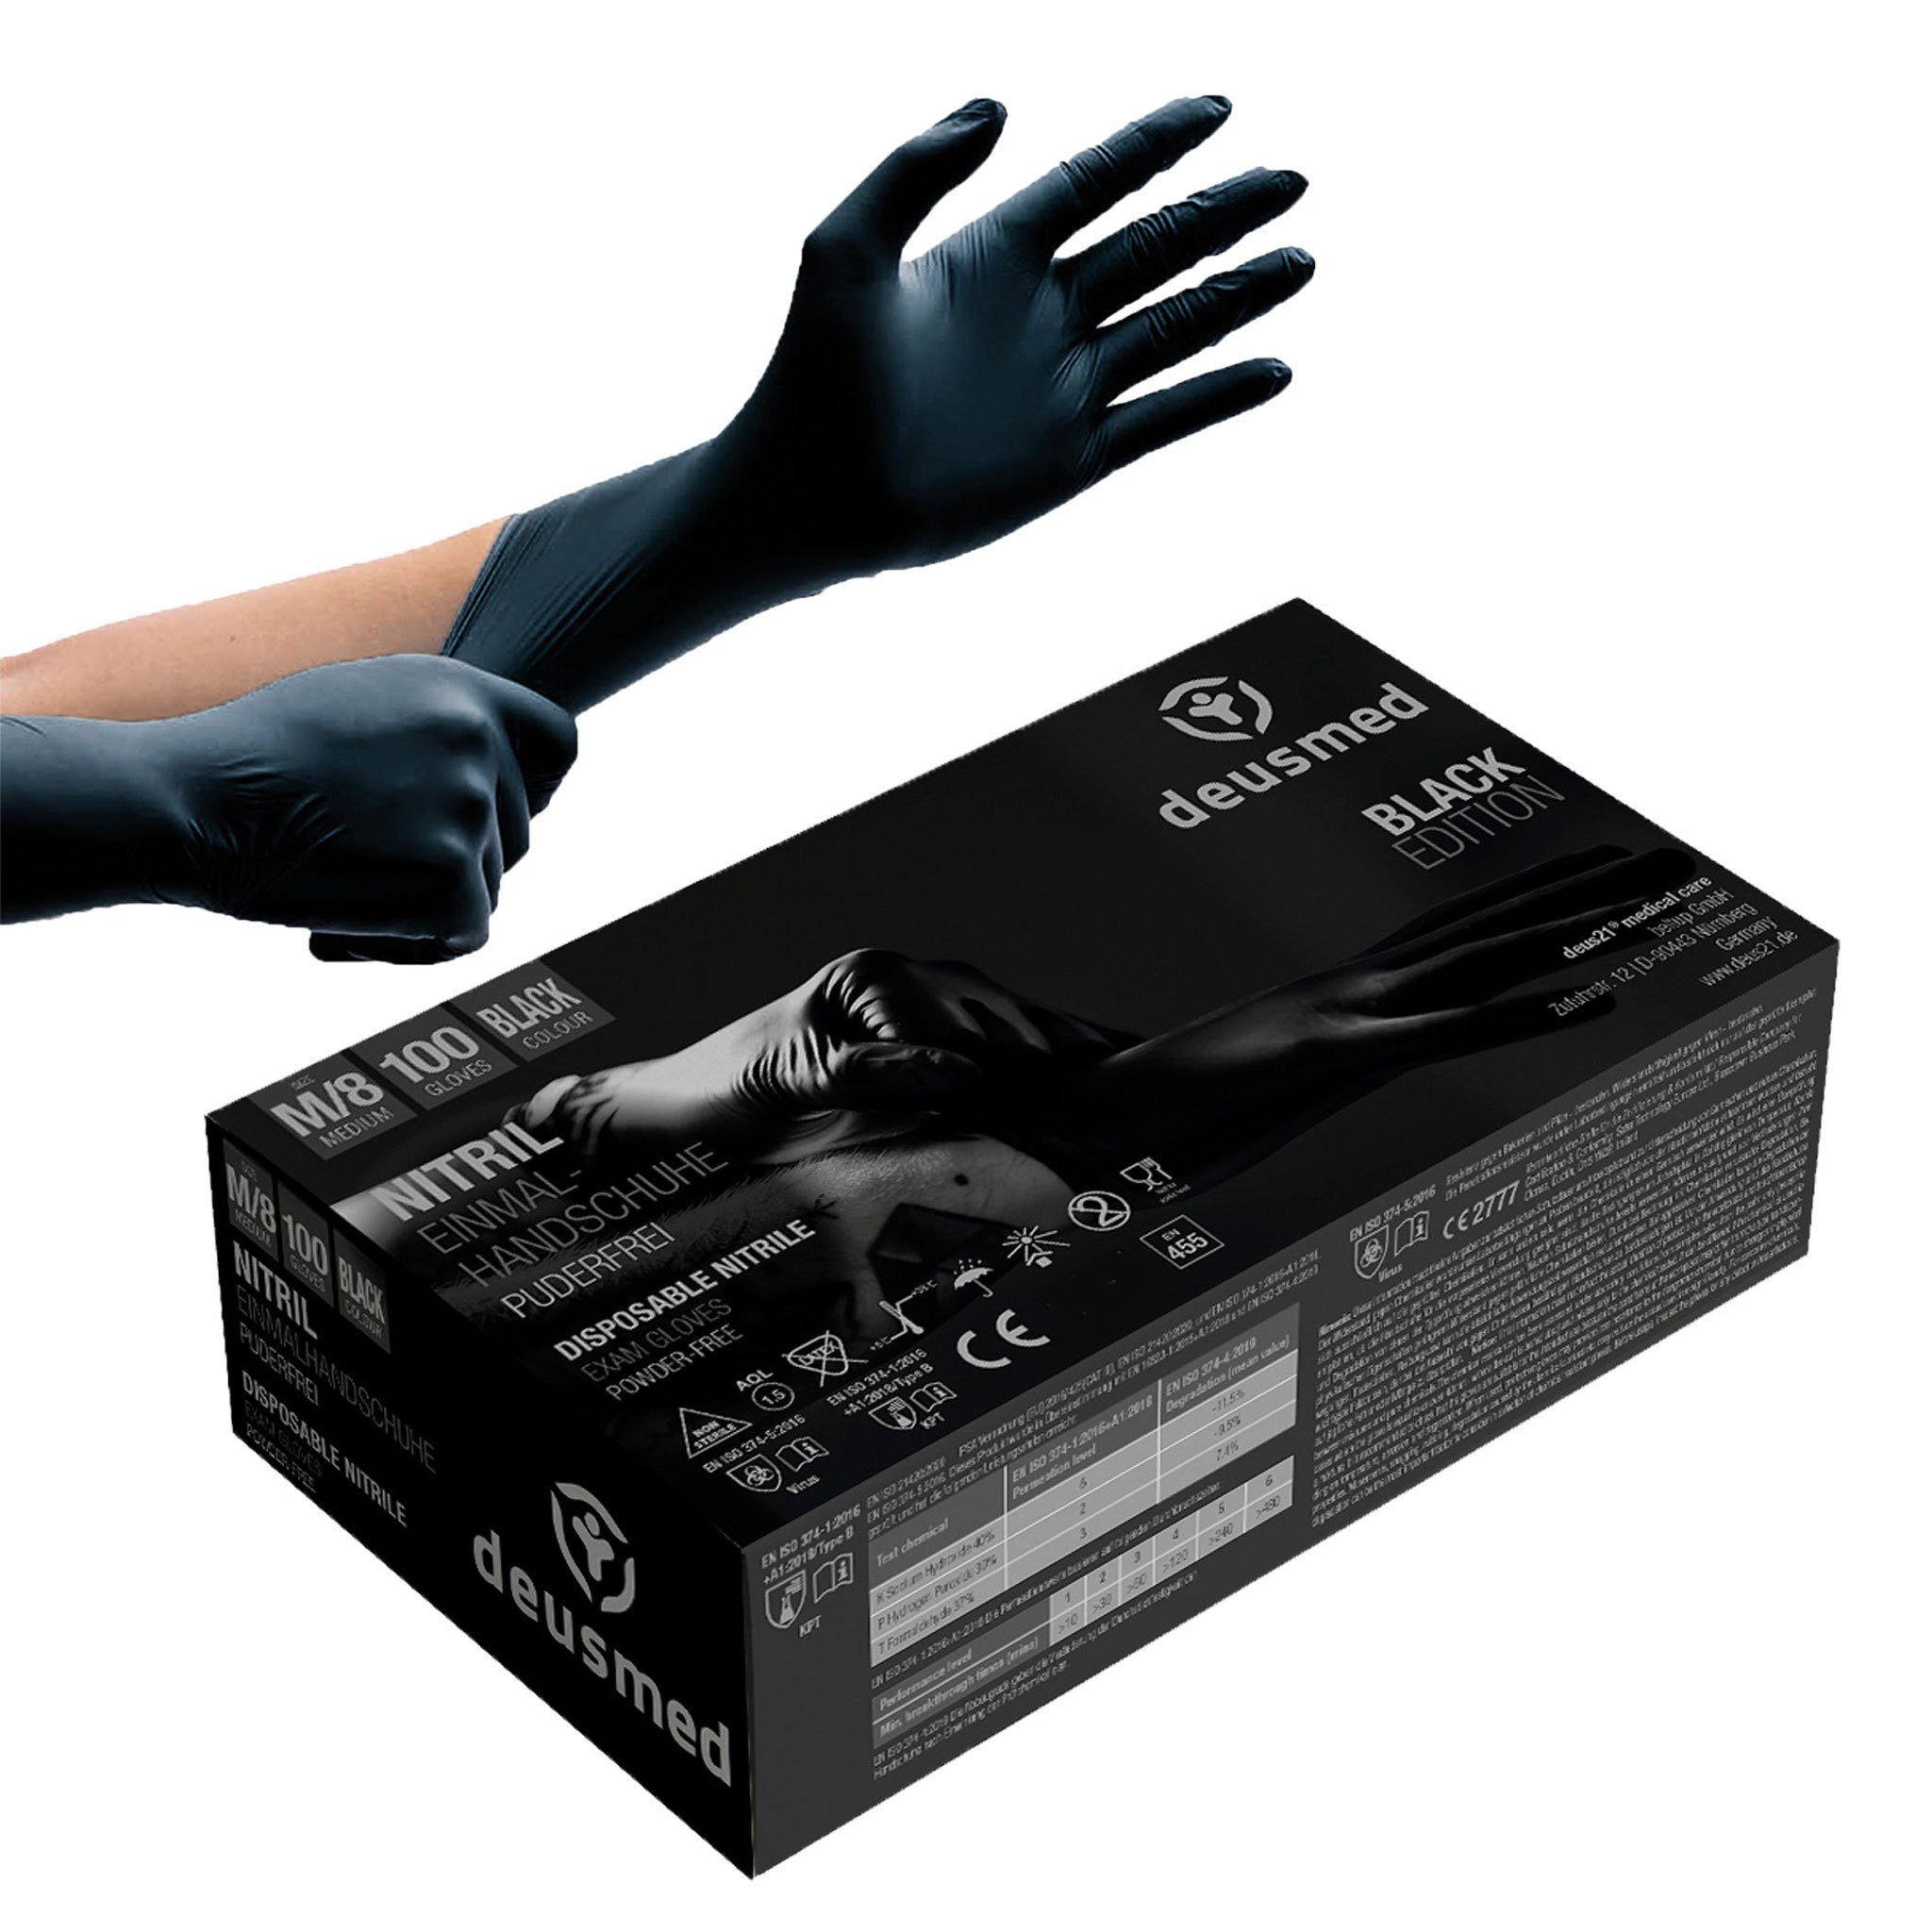 Einweghandschuhe Handschuhe - Nitril Puderfrei Schwarz Latex- Deus21 & Einweghandschuhe